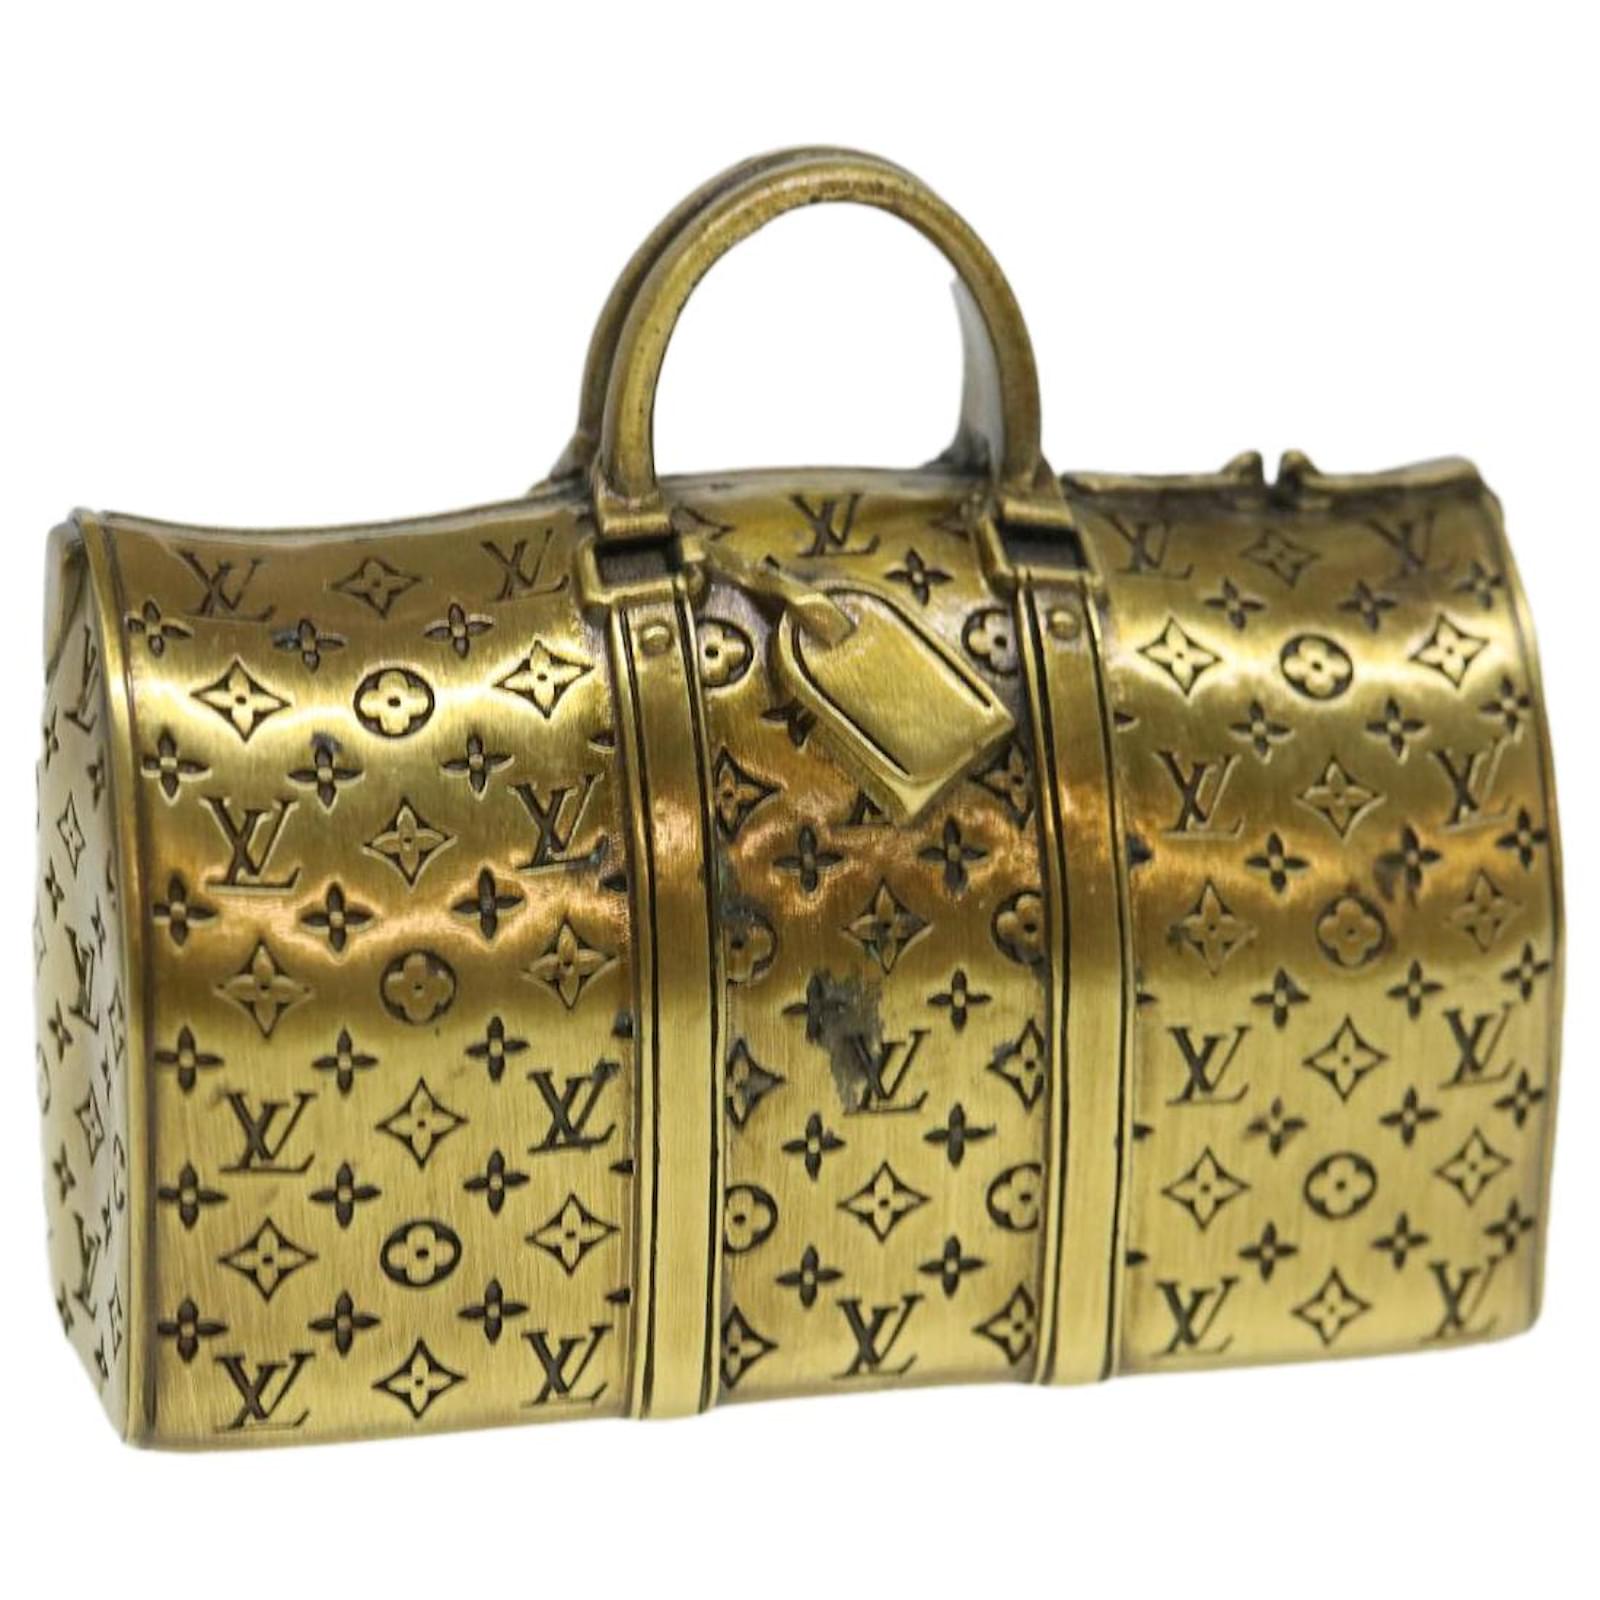 Louis Vuitton Monogram Luggage Paperweight - Gold Decorative